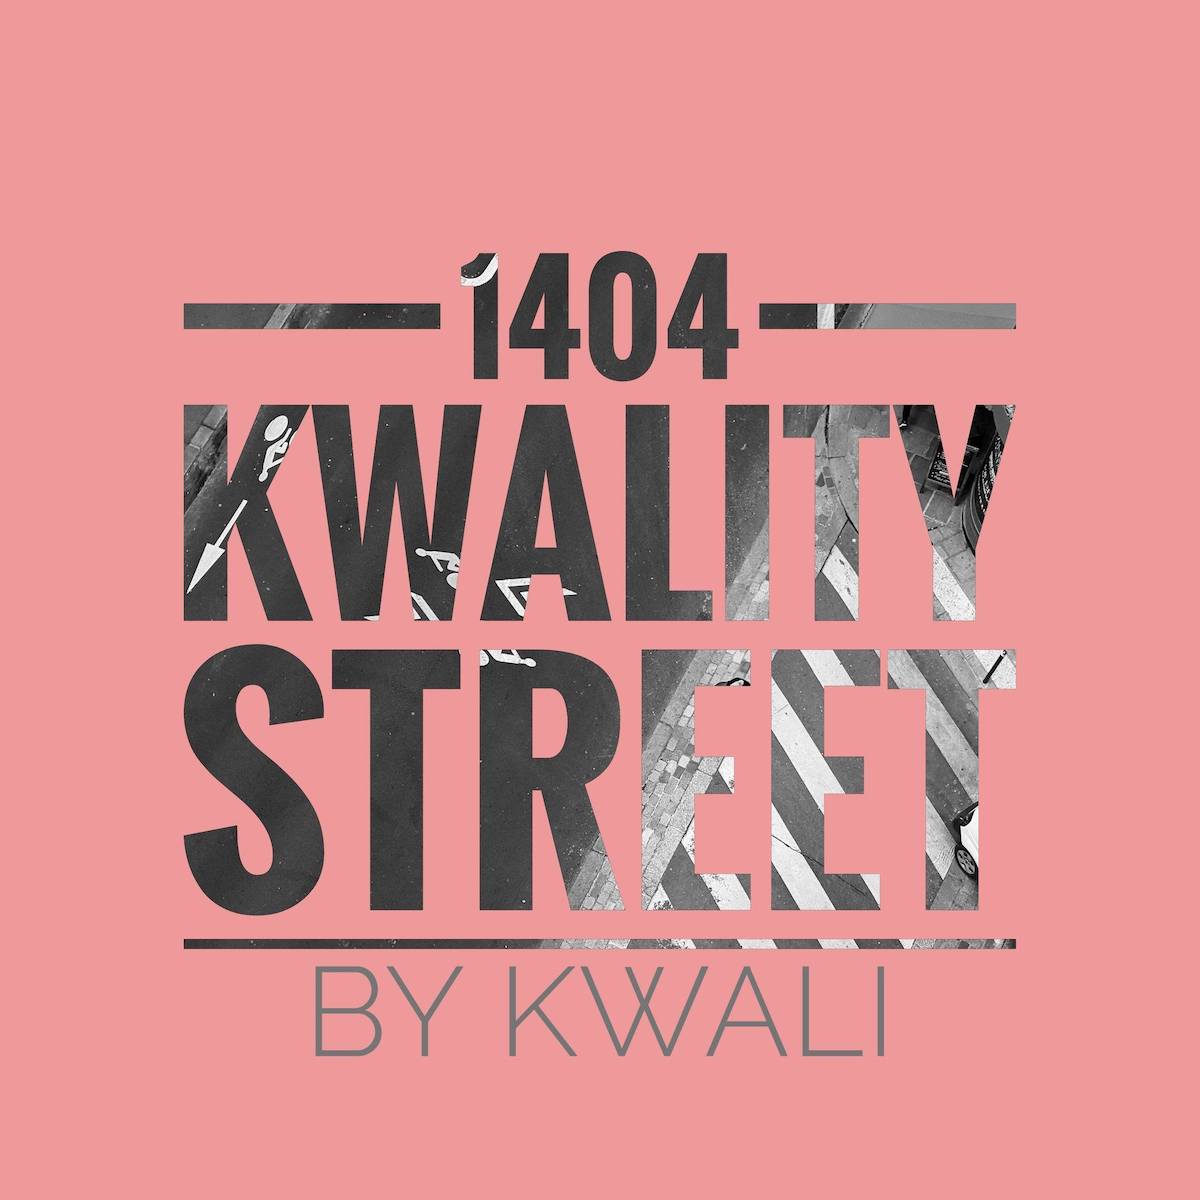 1404 Kwality Street by Kwali